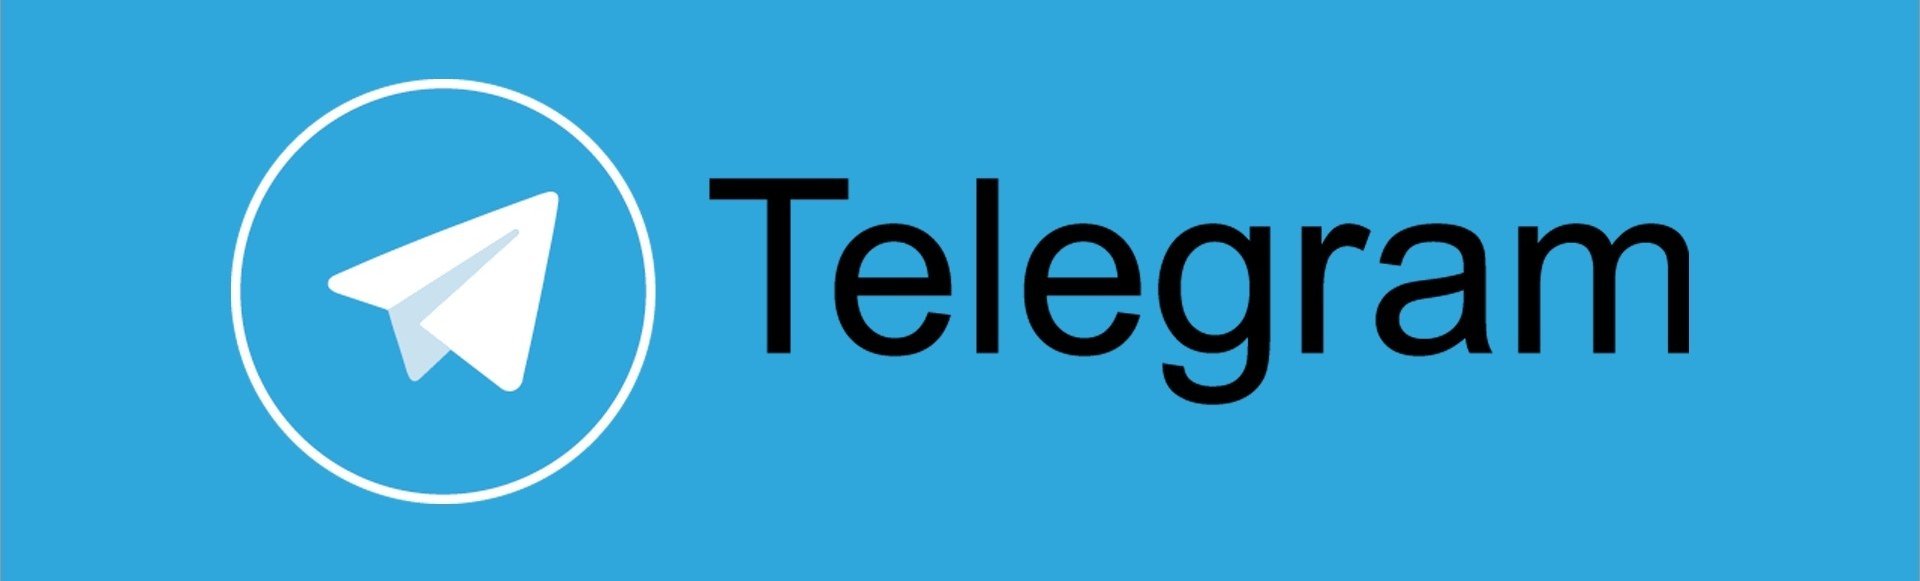 Восстановить телеграмм без номера телефона можно фото 109